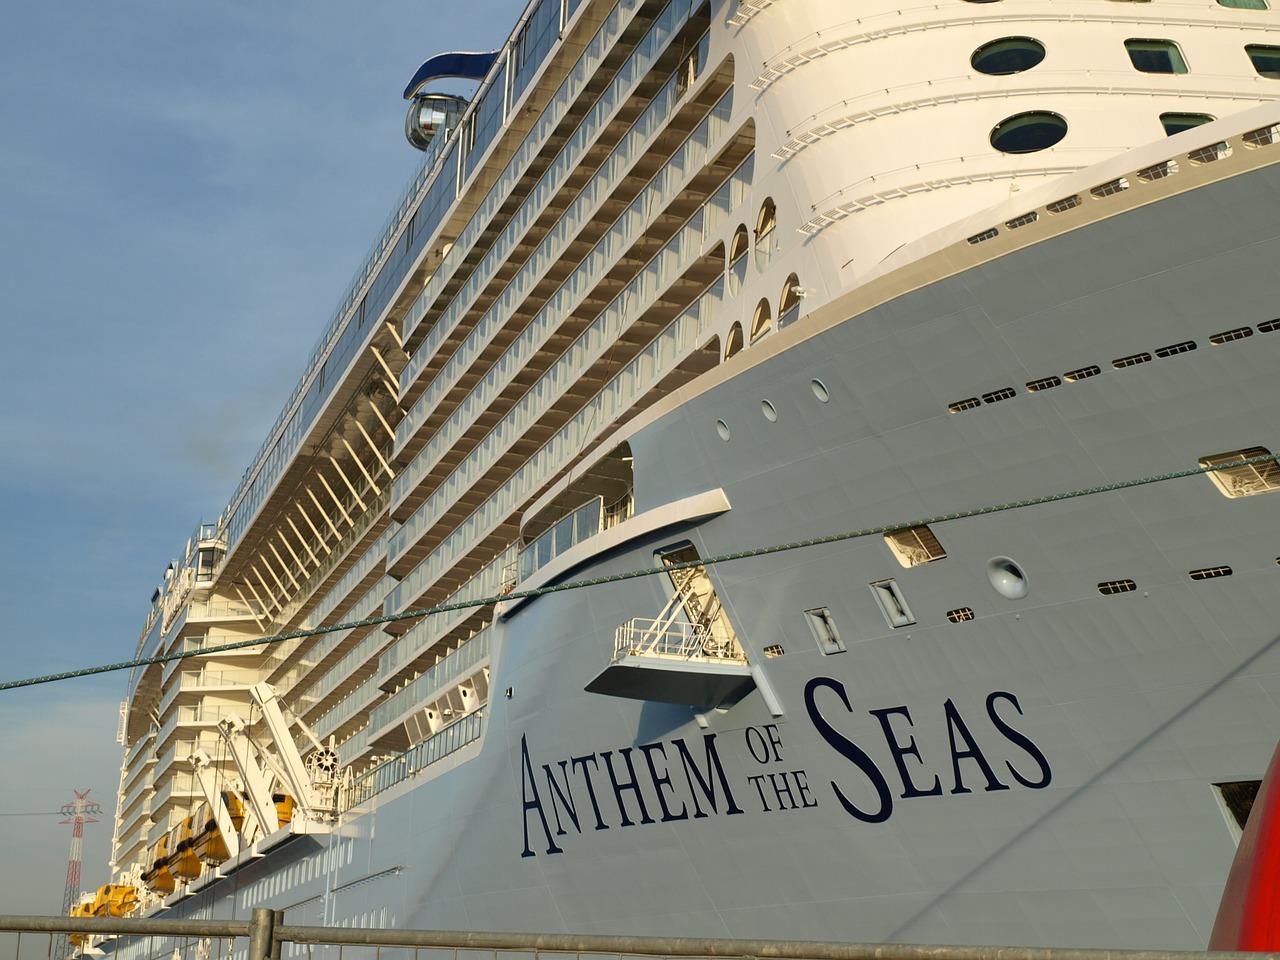 anthem of the seas cruise ship ozeanriese free photo